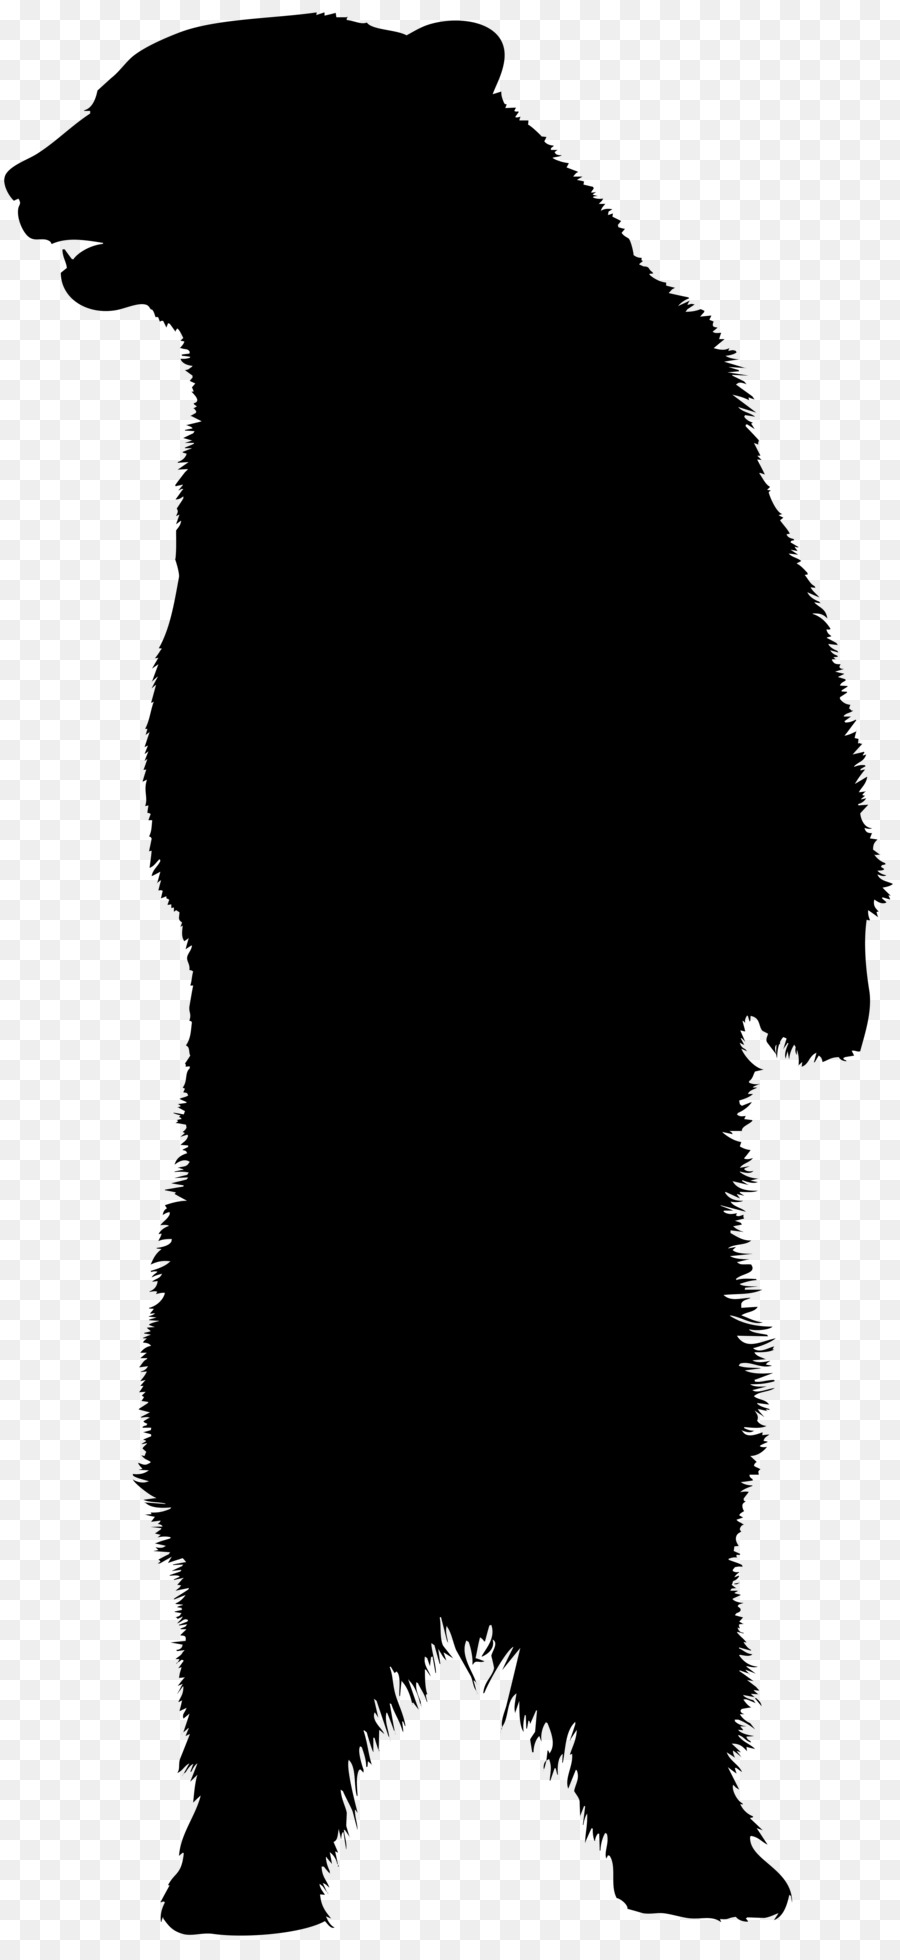 American black bear Silhouette Clip art - bear png download - 3697*8000 - Free Transparent Bear png Download.